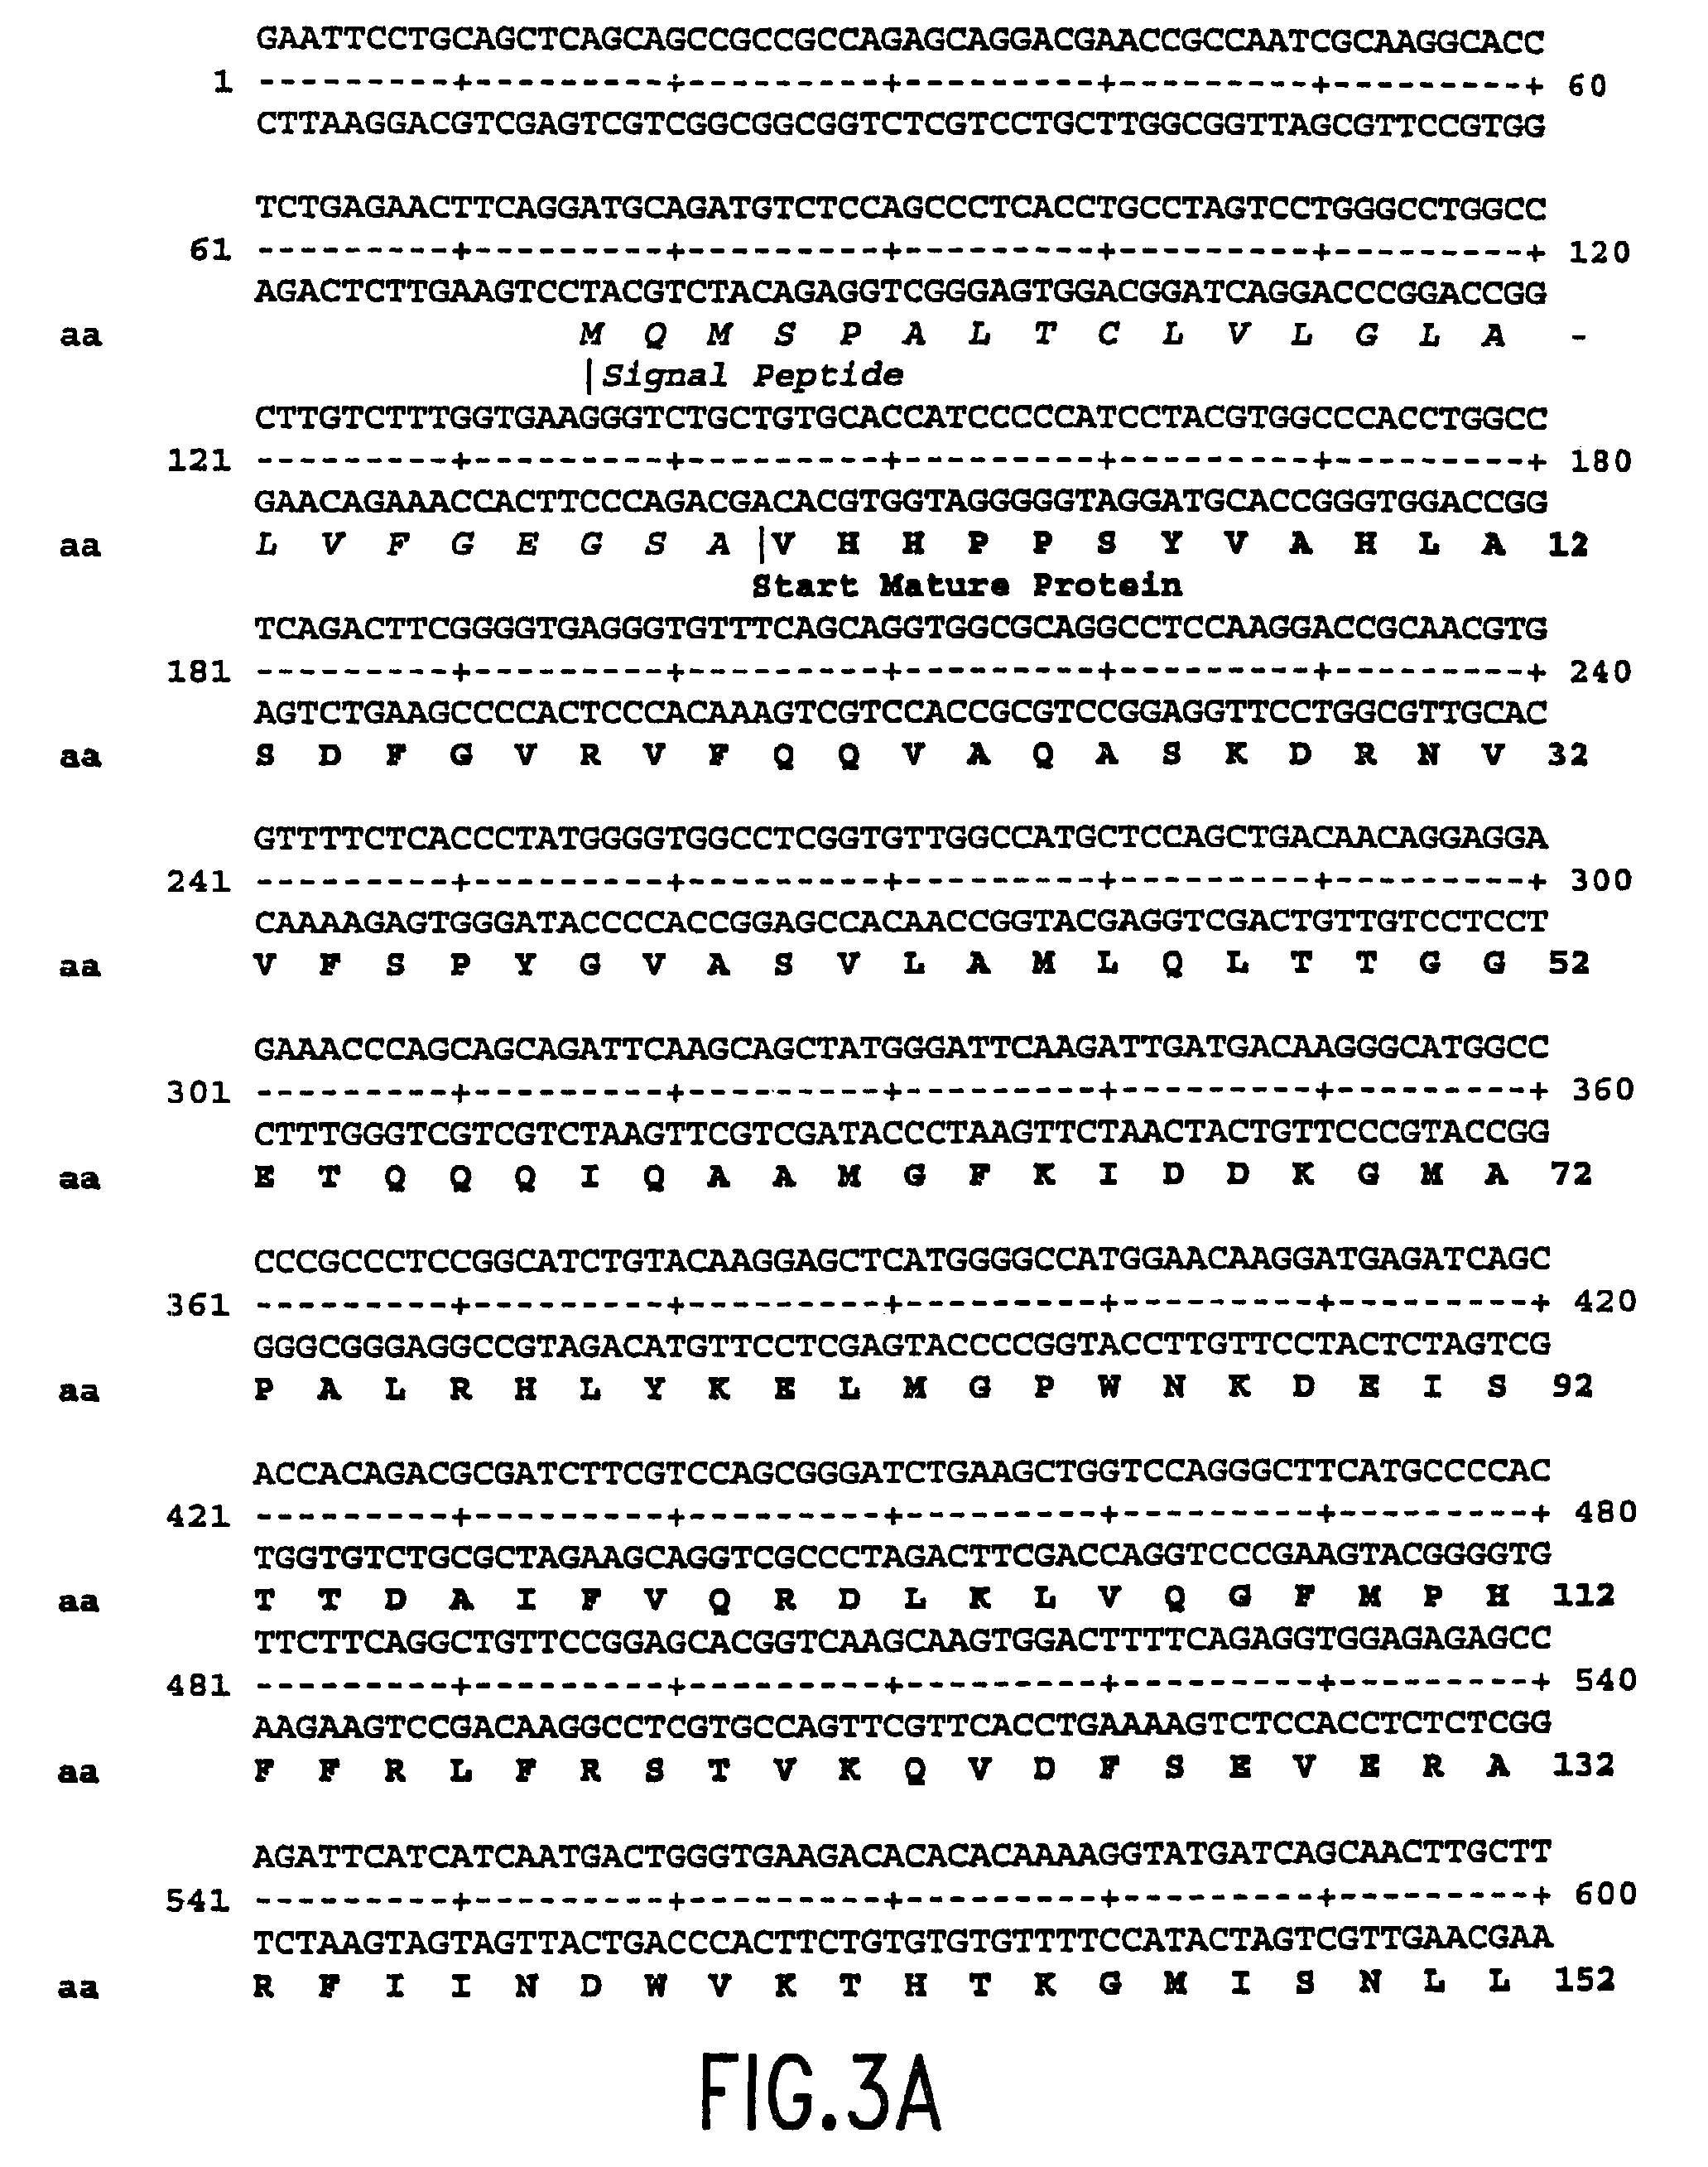 Mutant plasminogen activator-inhibitor type 1 (PAI-1) and uses thereof